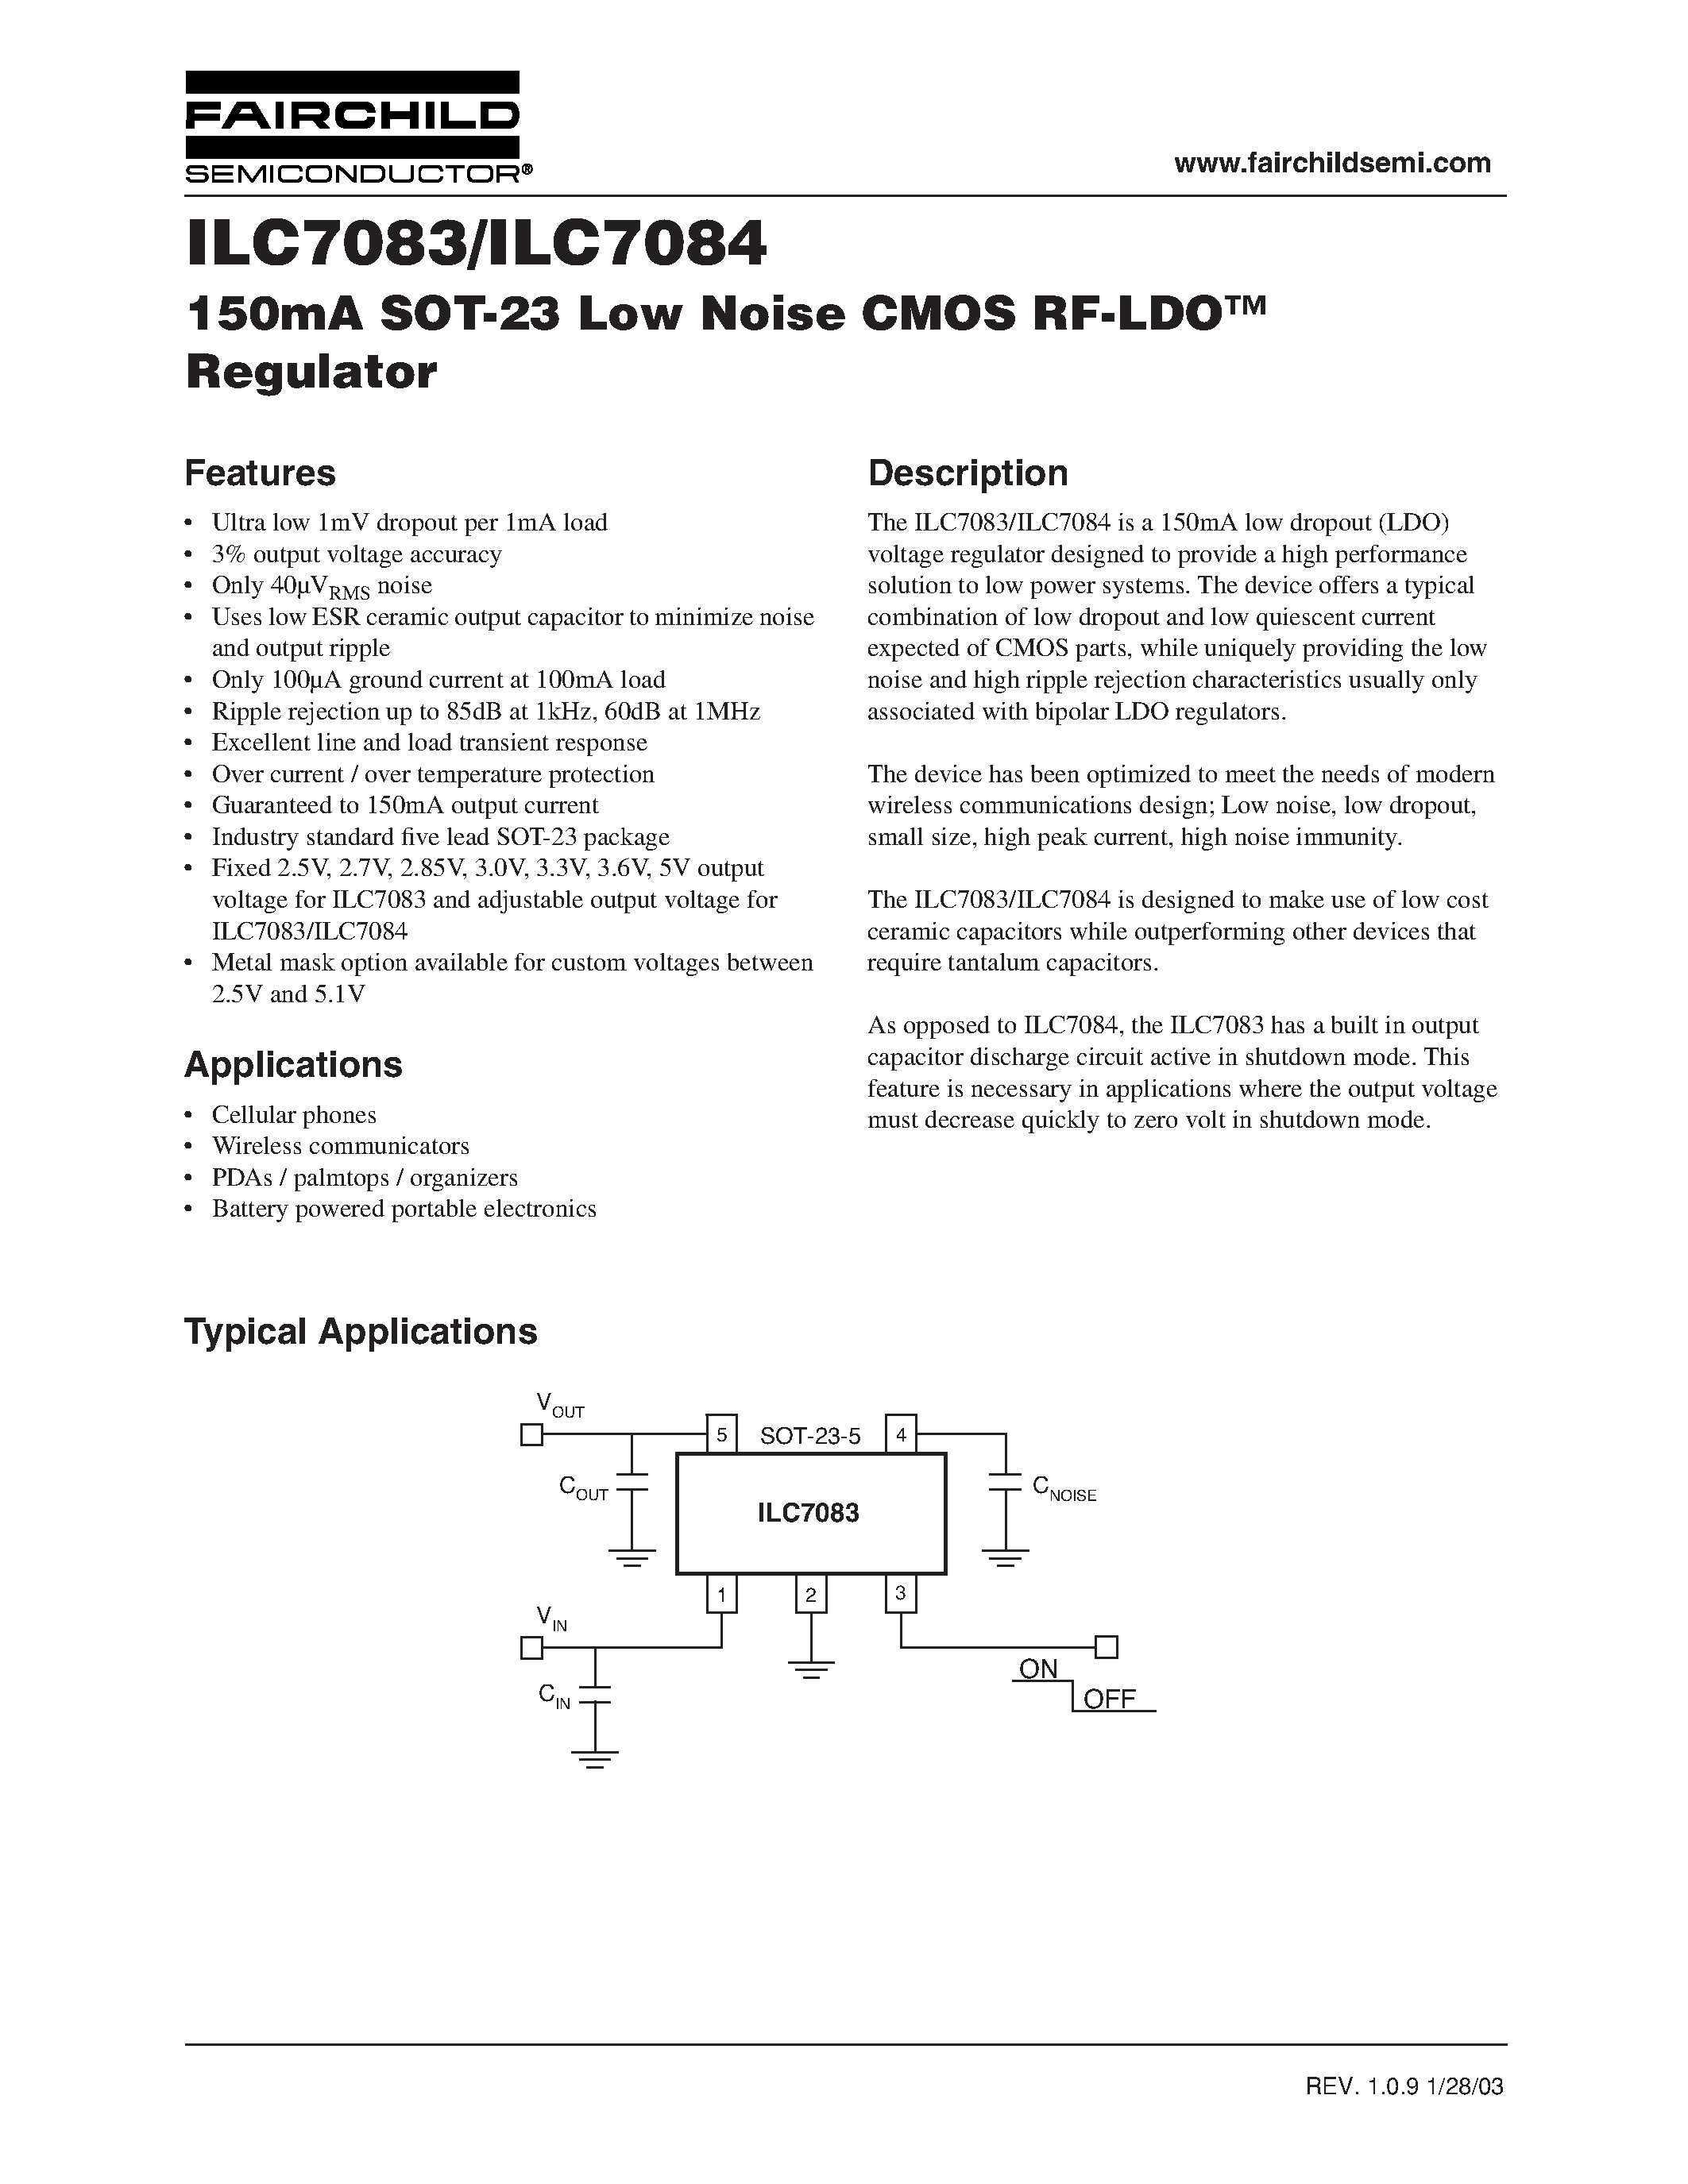 Datasheet ILC7084 - 150mA SOT-23 Low Noise CMOS RF-LDO Regulator page 1